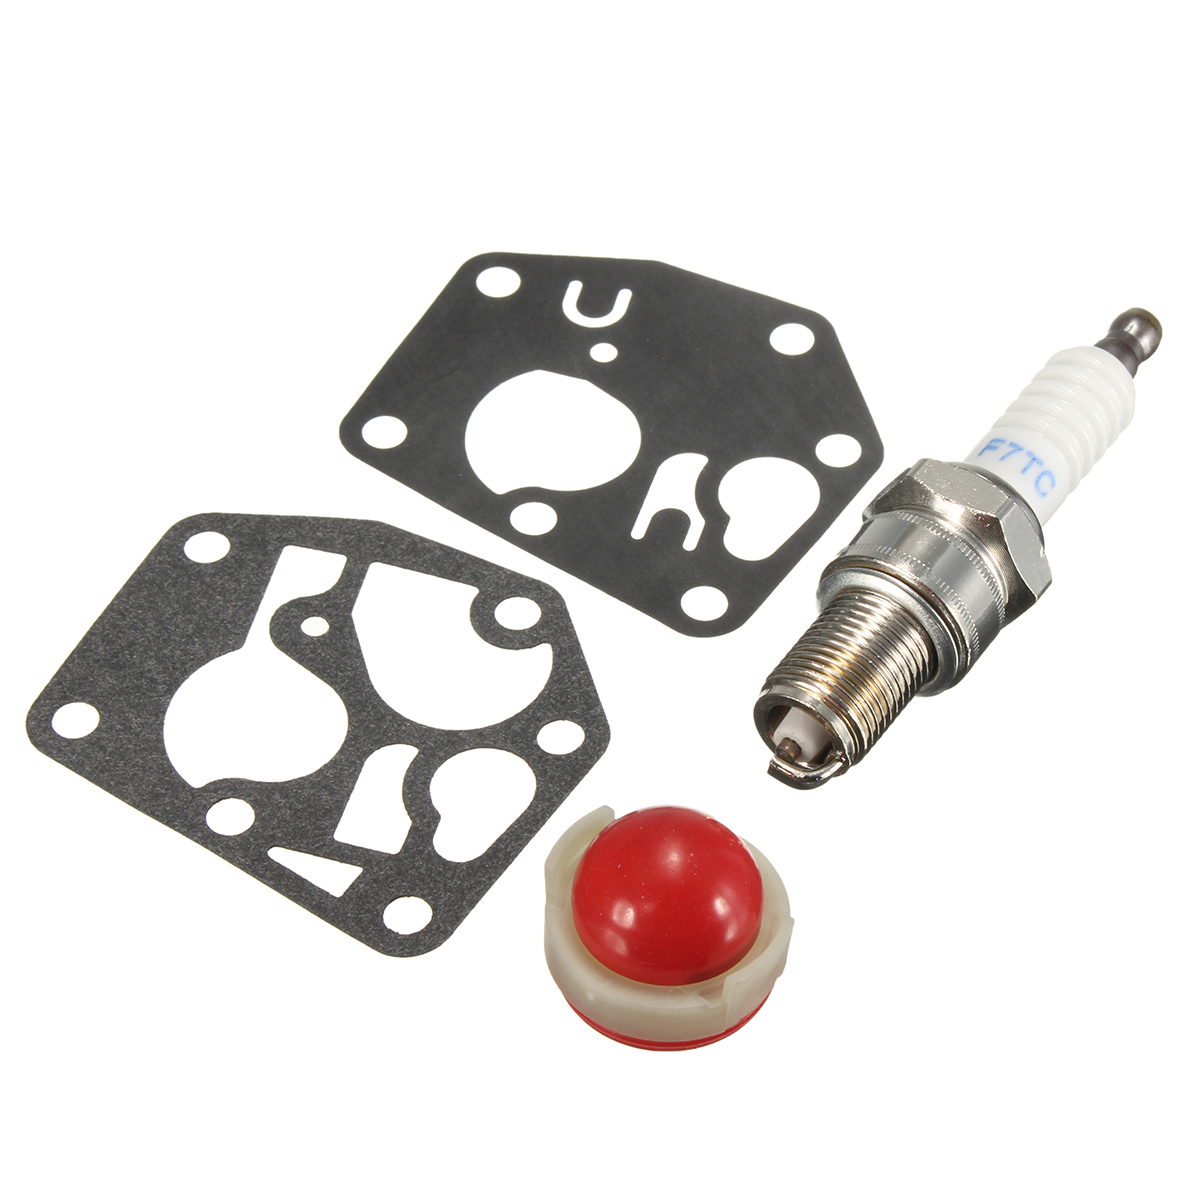 

Carburetor Carb Primer Bulb Diaphragm Gasket Plug Kit For Briggs Stratton 795083 495770